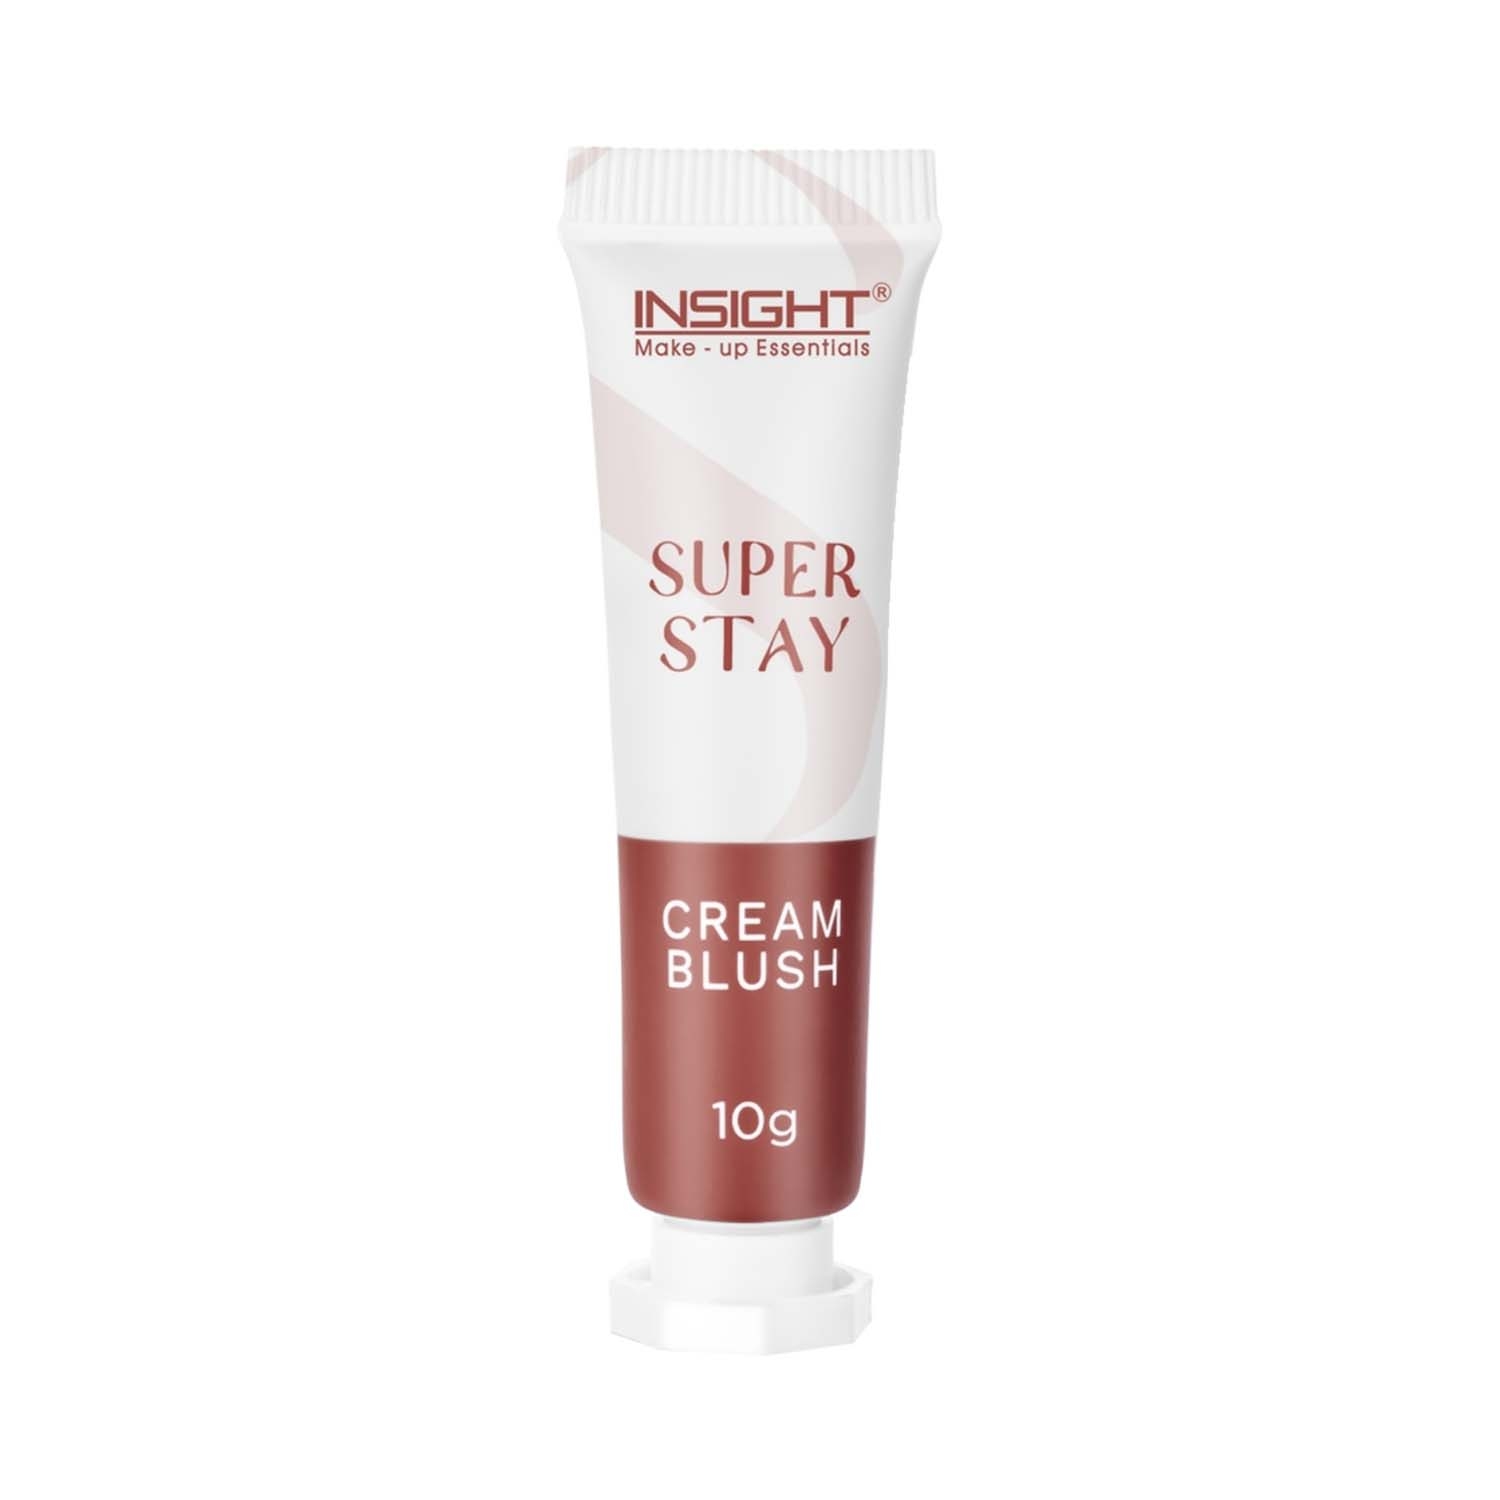 Insight Cosmetics | Insight Cosmetics Super Stay Cream Blush - Nut Jelly (10g)